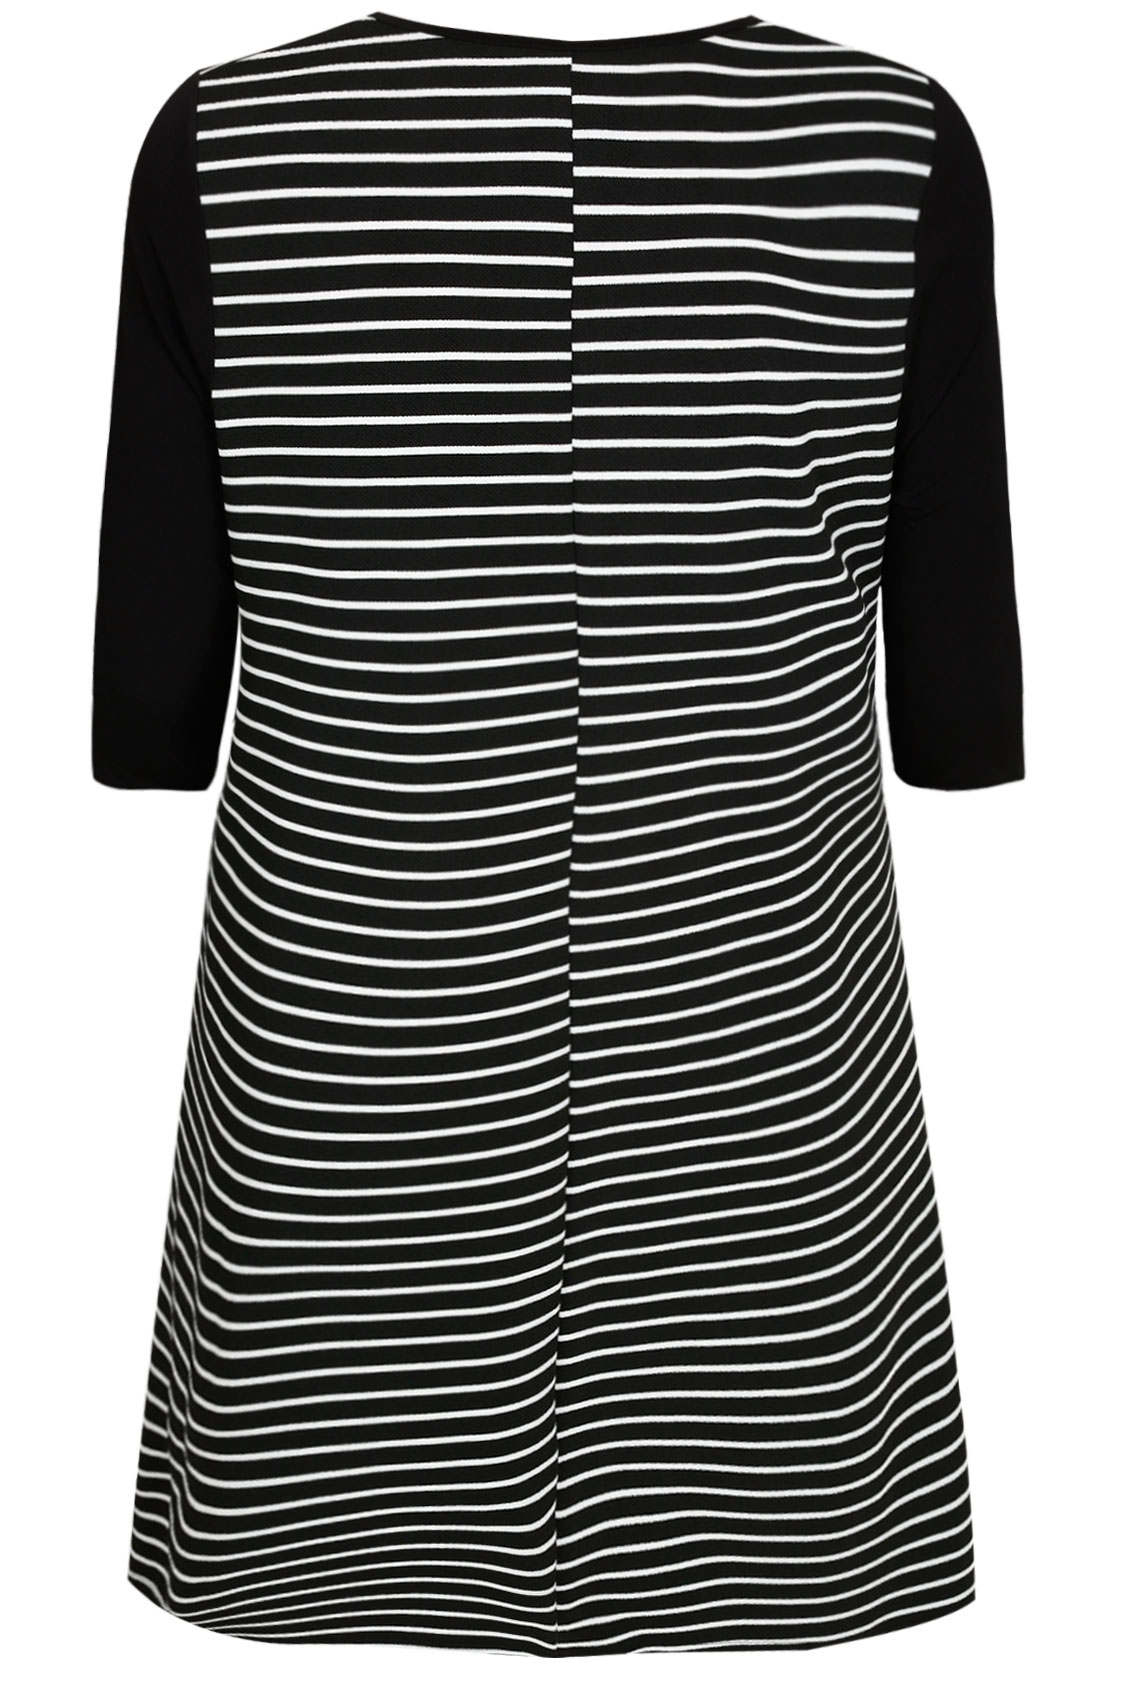 Black & White Stripe Pinafore Style Swing Dress Plus size